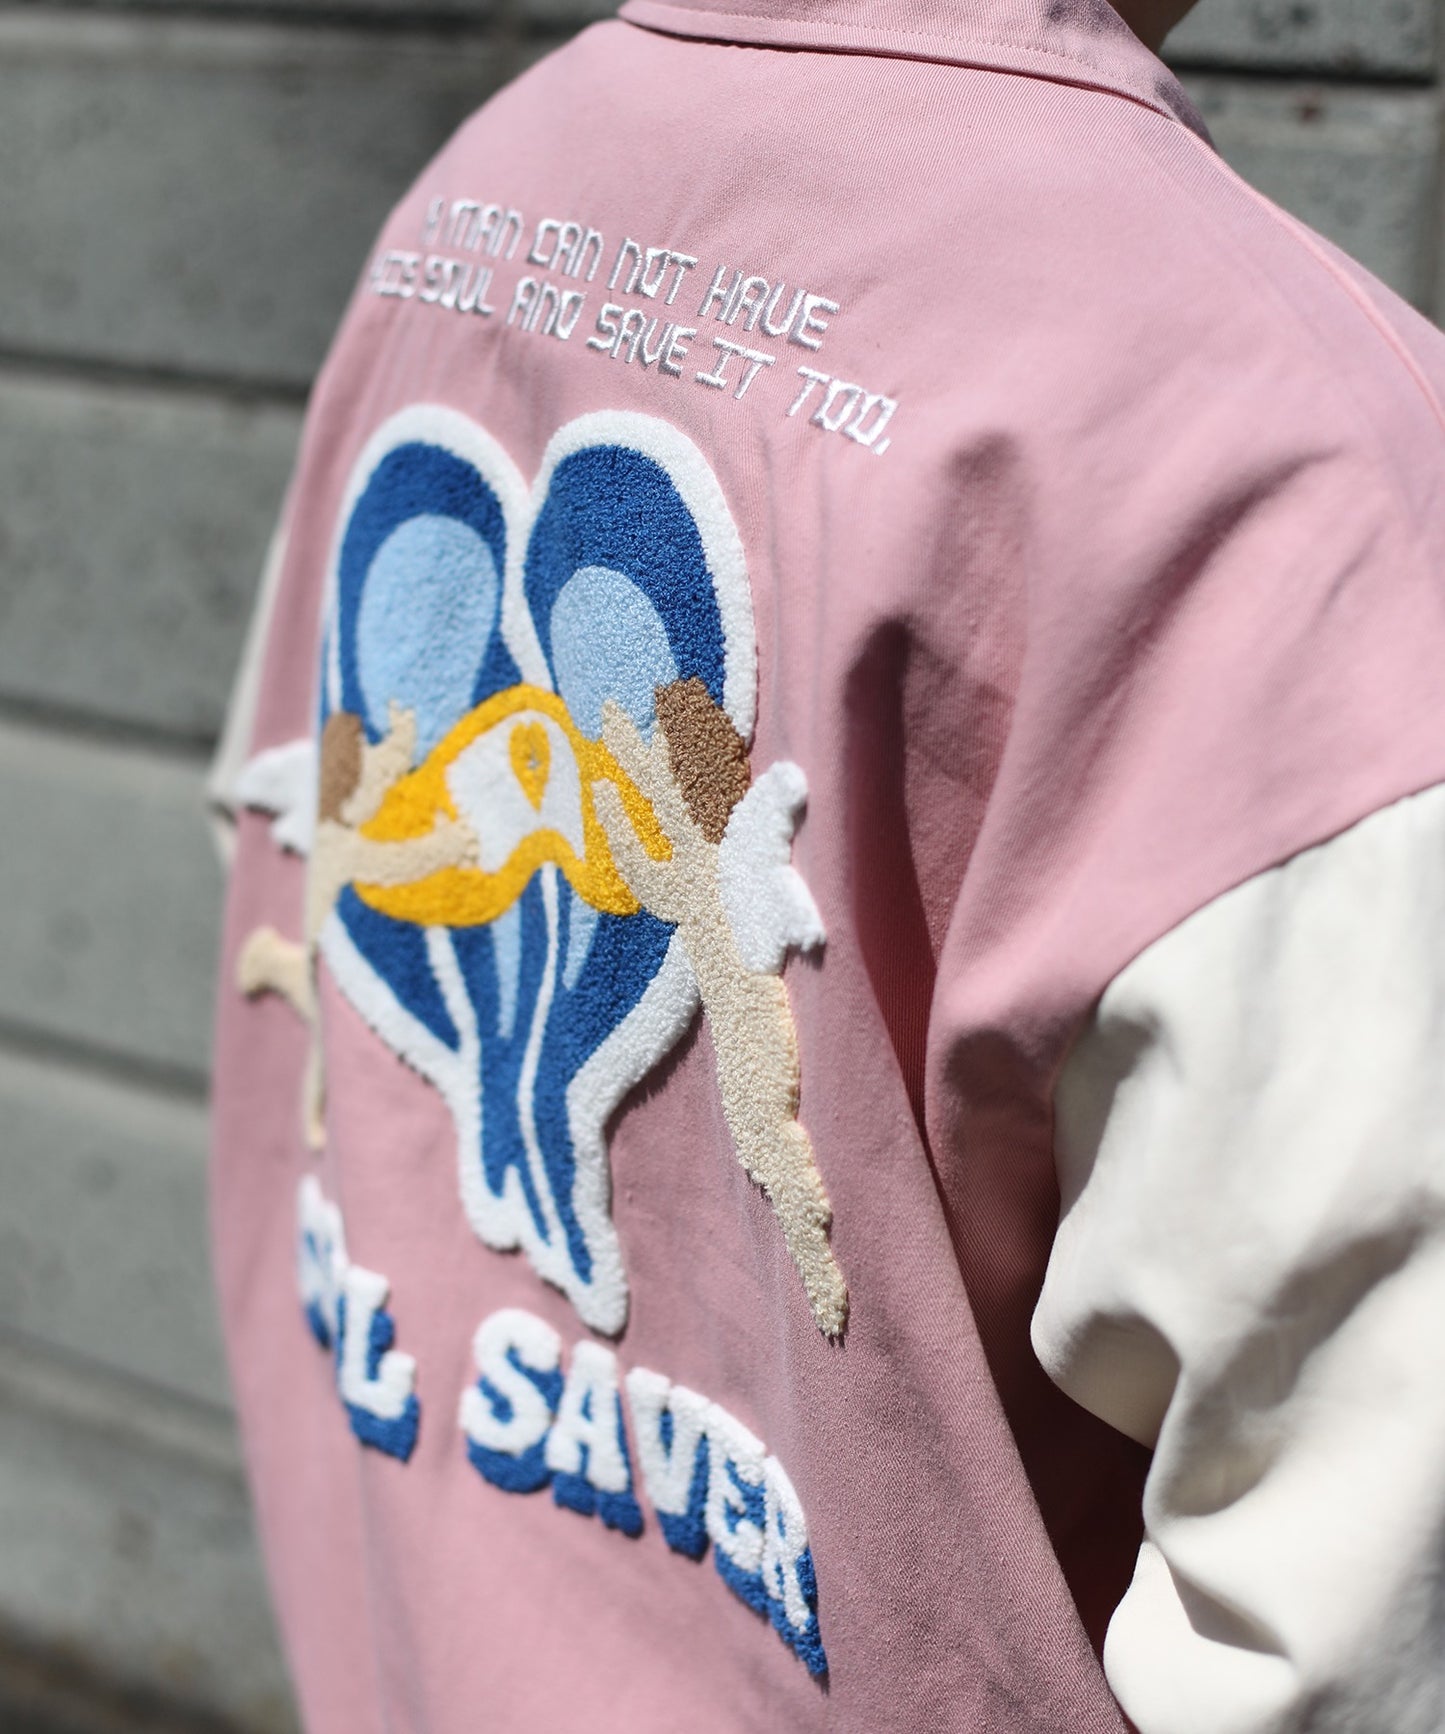 【HOOK -original- 】「SOUL SAVER」 スタジャンジャケット